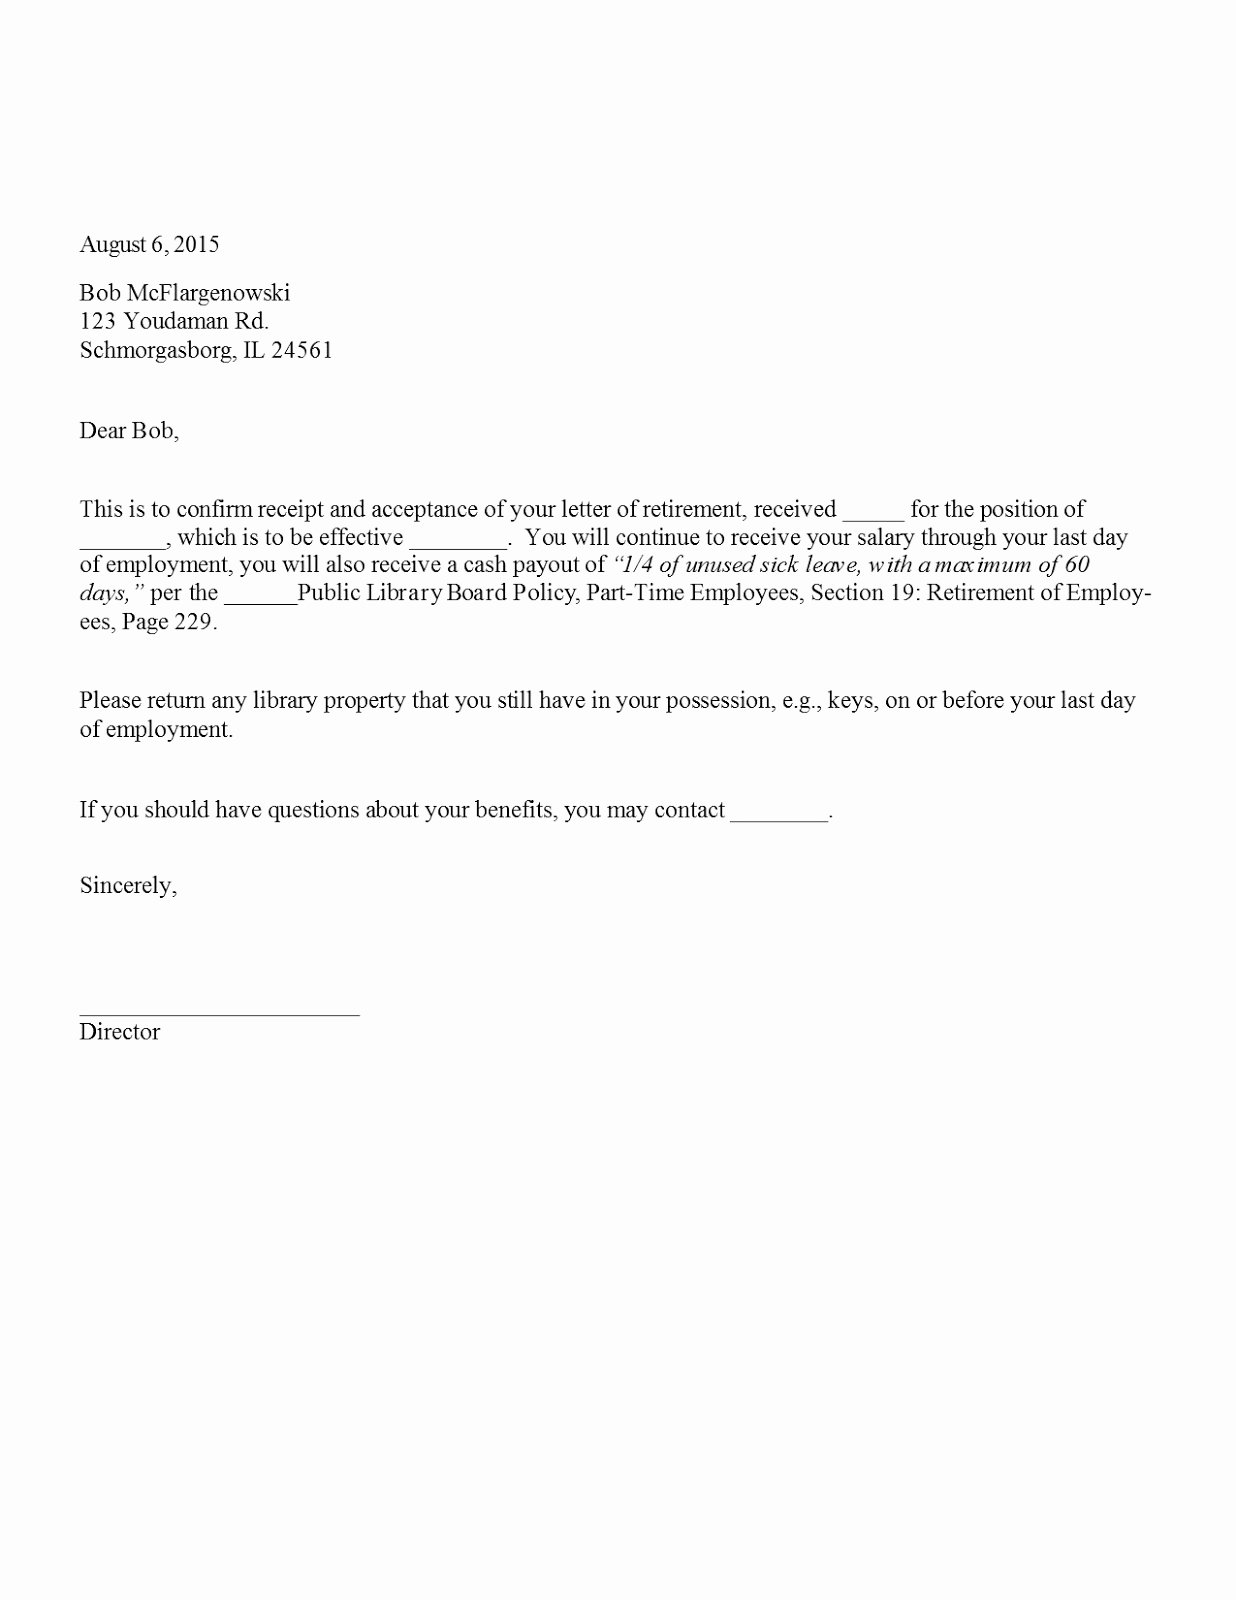 sample retirement acceptance letter